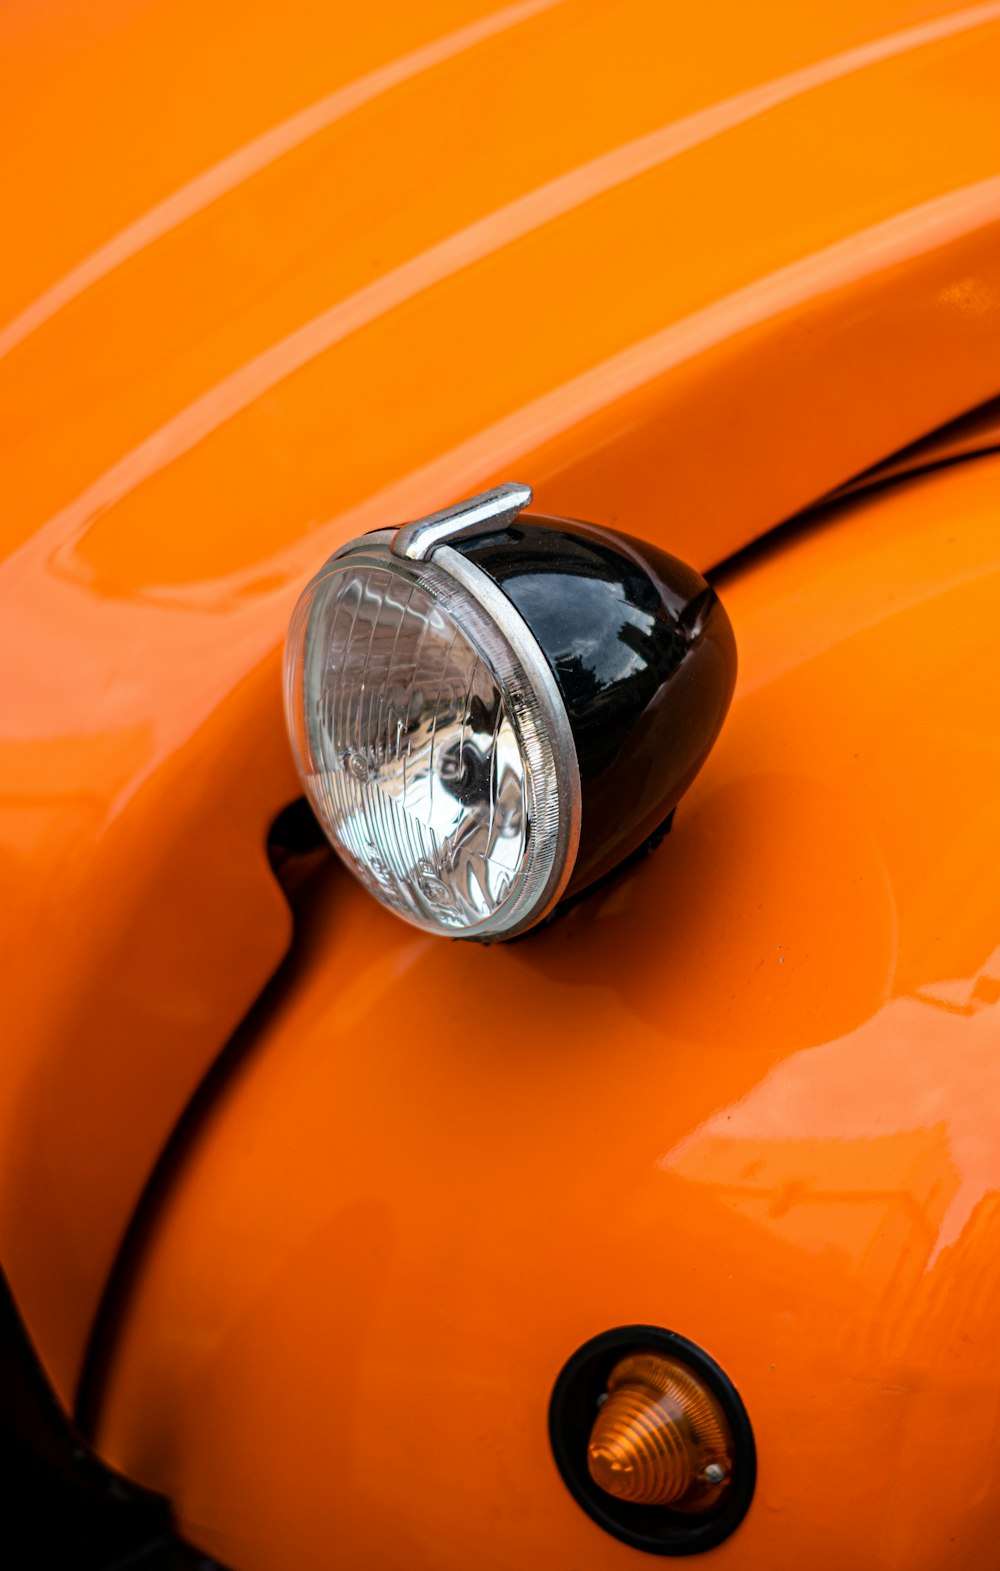 orange car with silver headlight